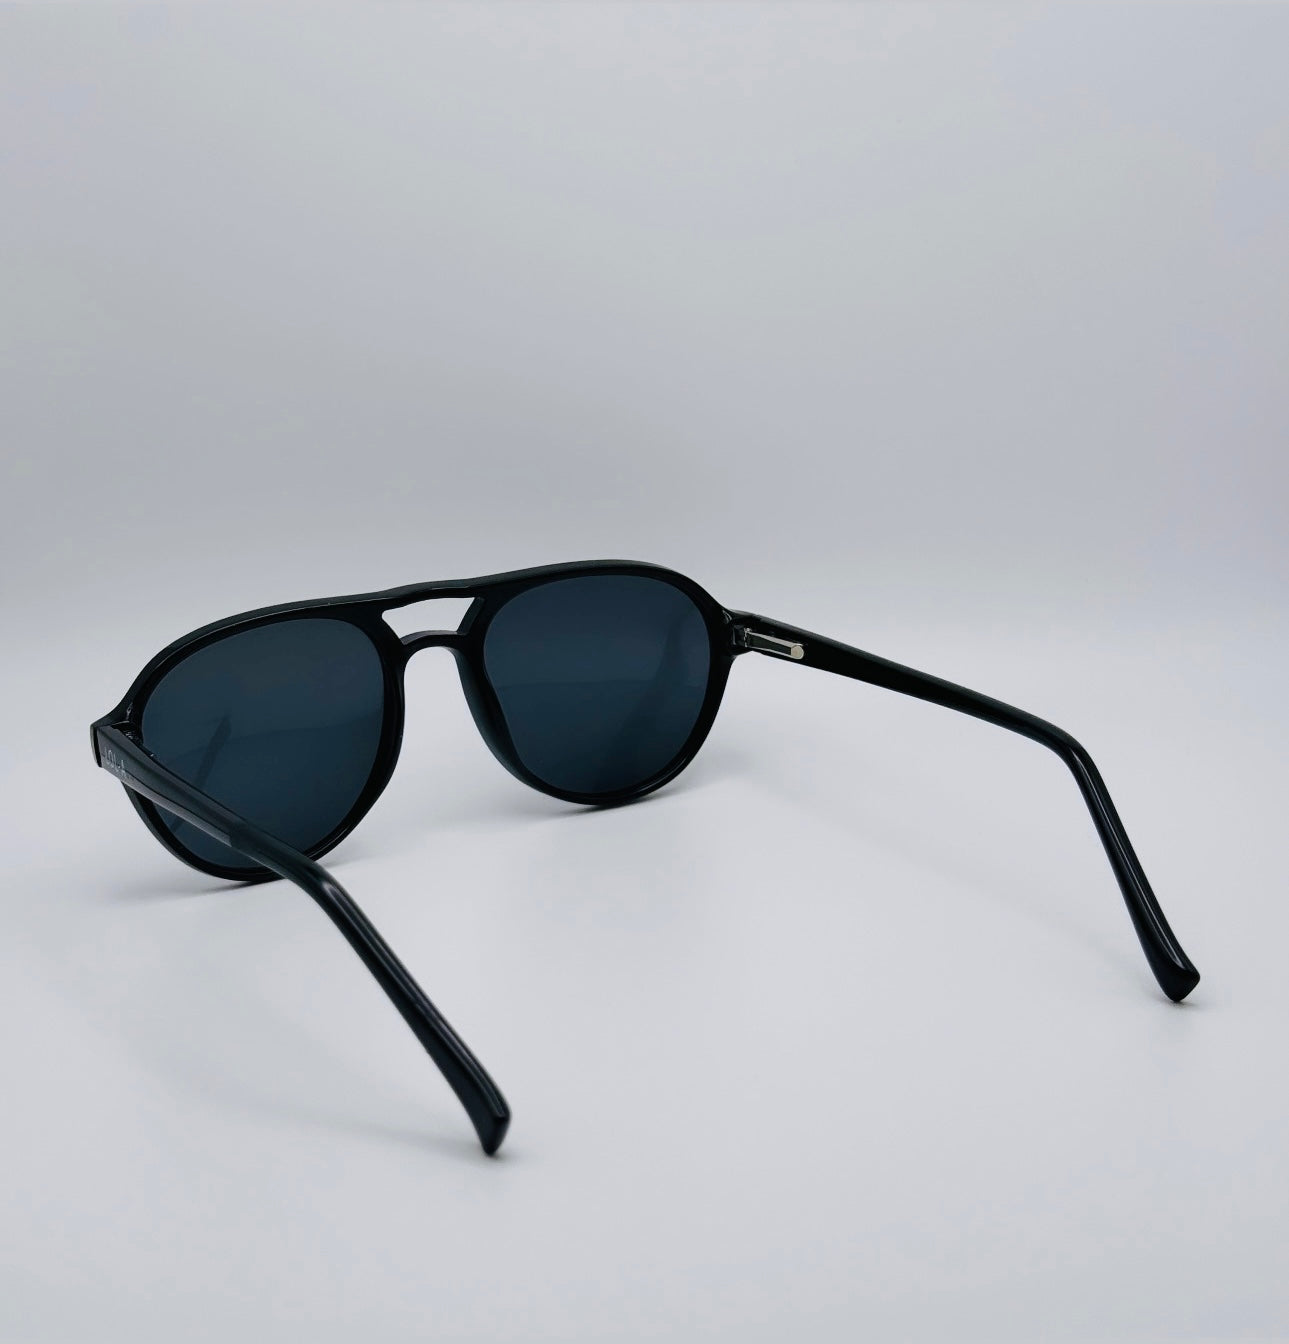 "BLACK WIDOW" Sunglasses